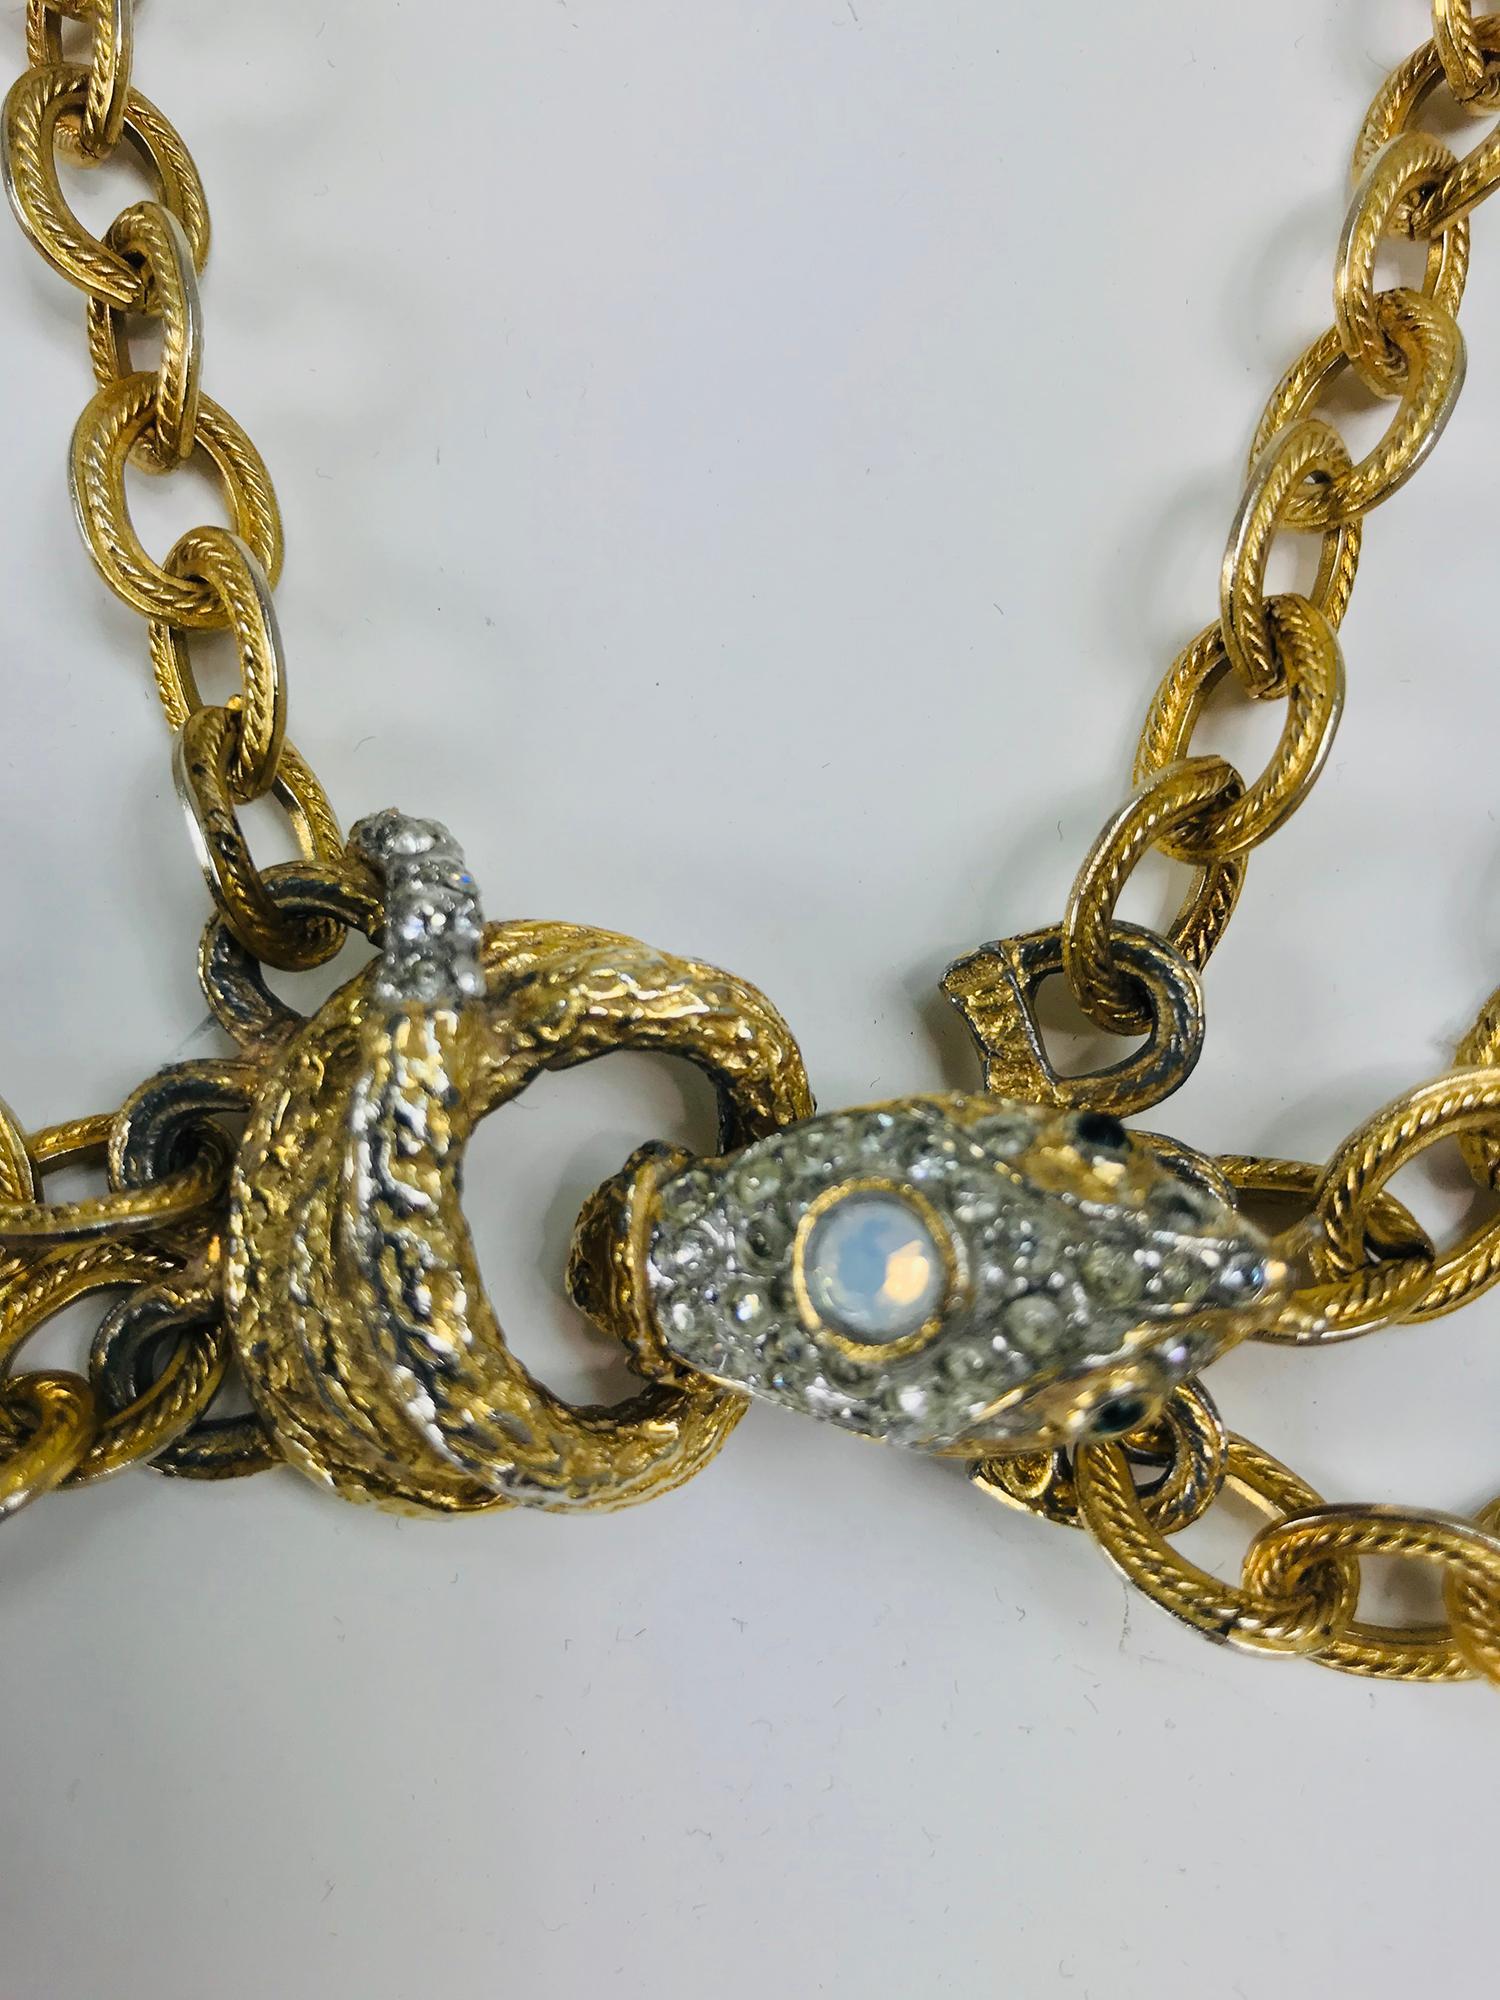 50k gold chain